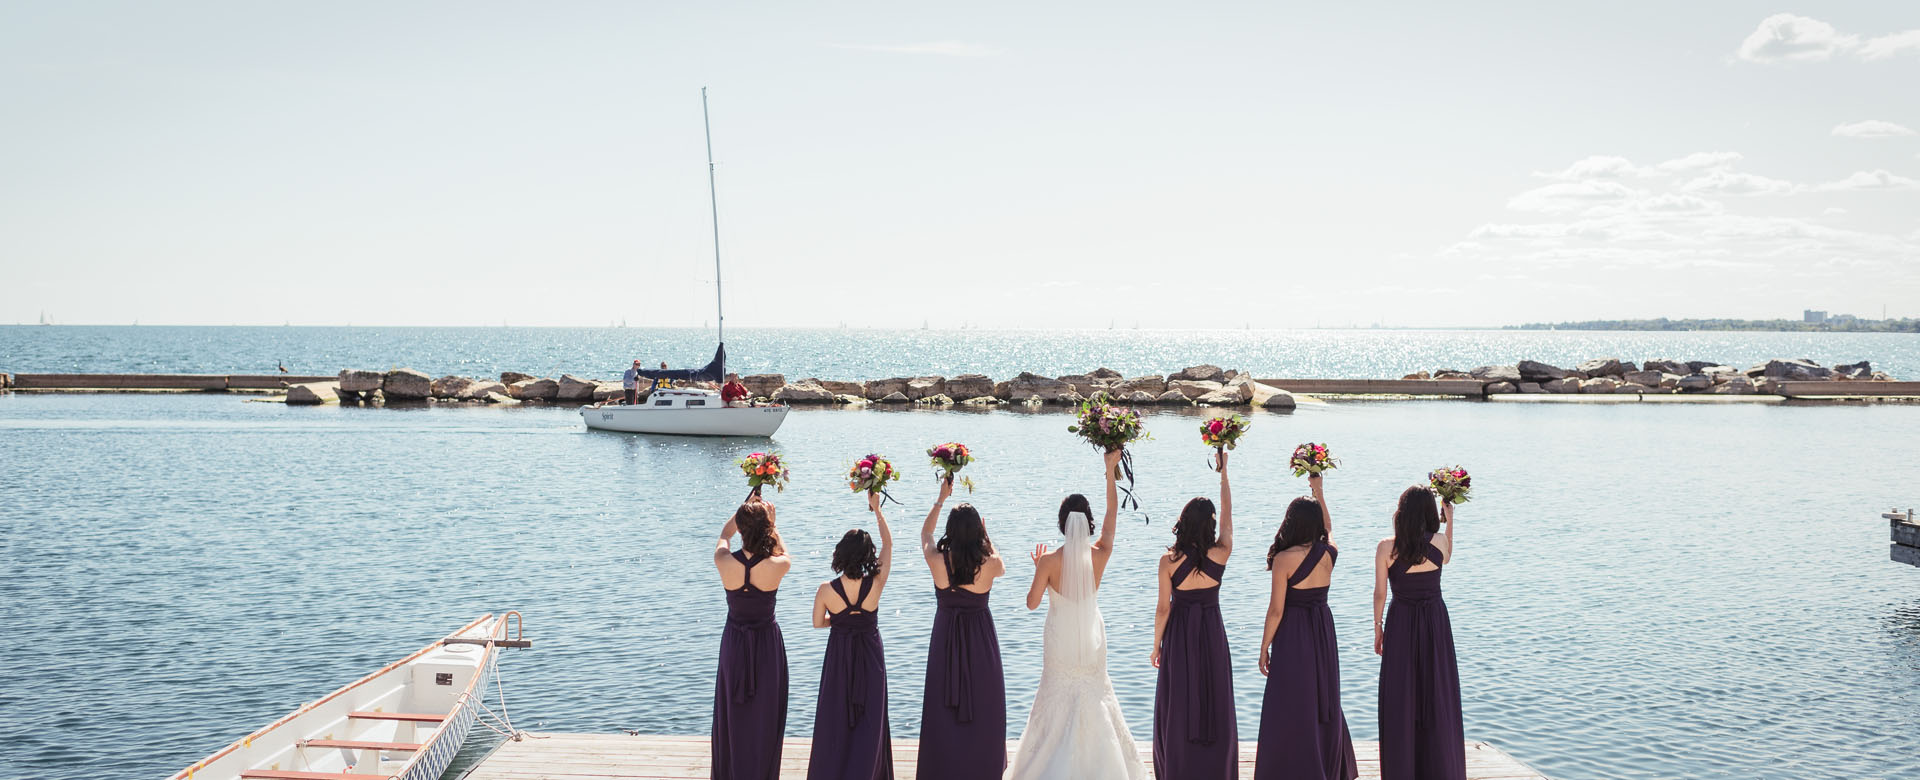 Toronto Wedding Photographer | Toronto Wedding Studios | Toronto Wedding | Wedding Photography Services